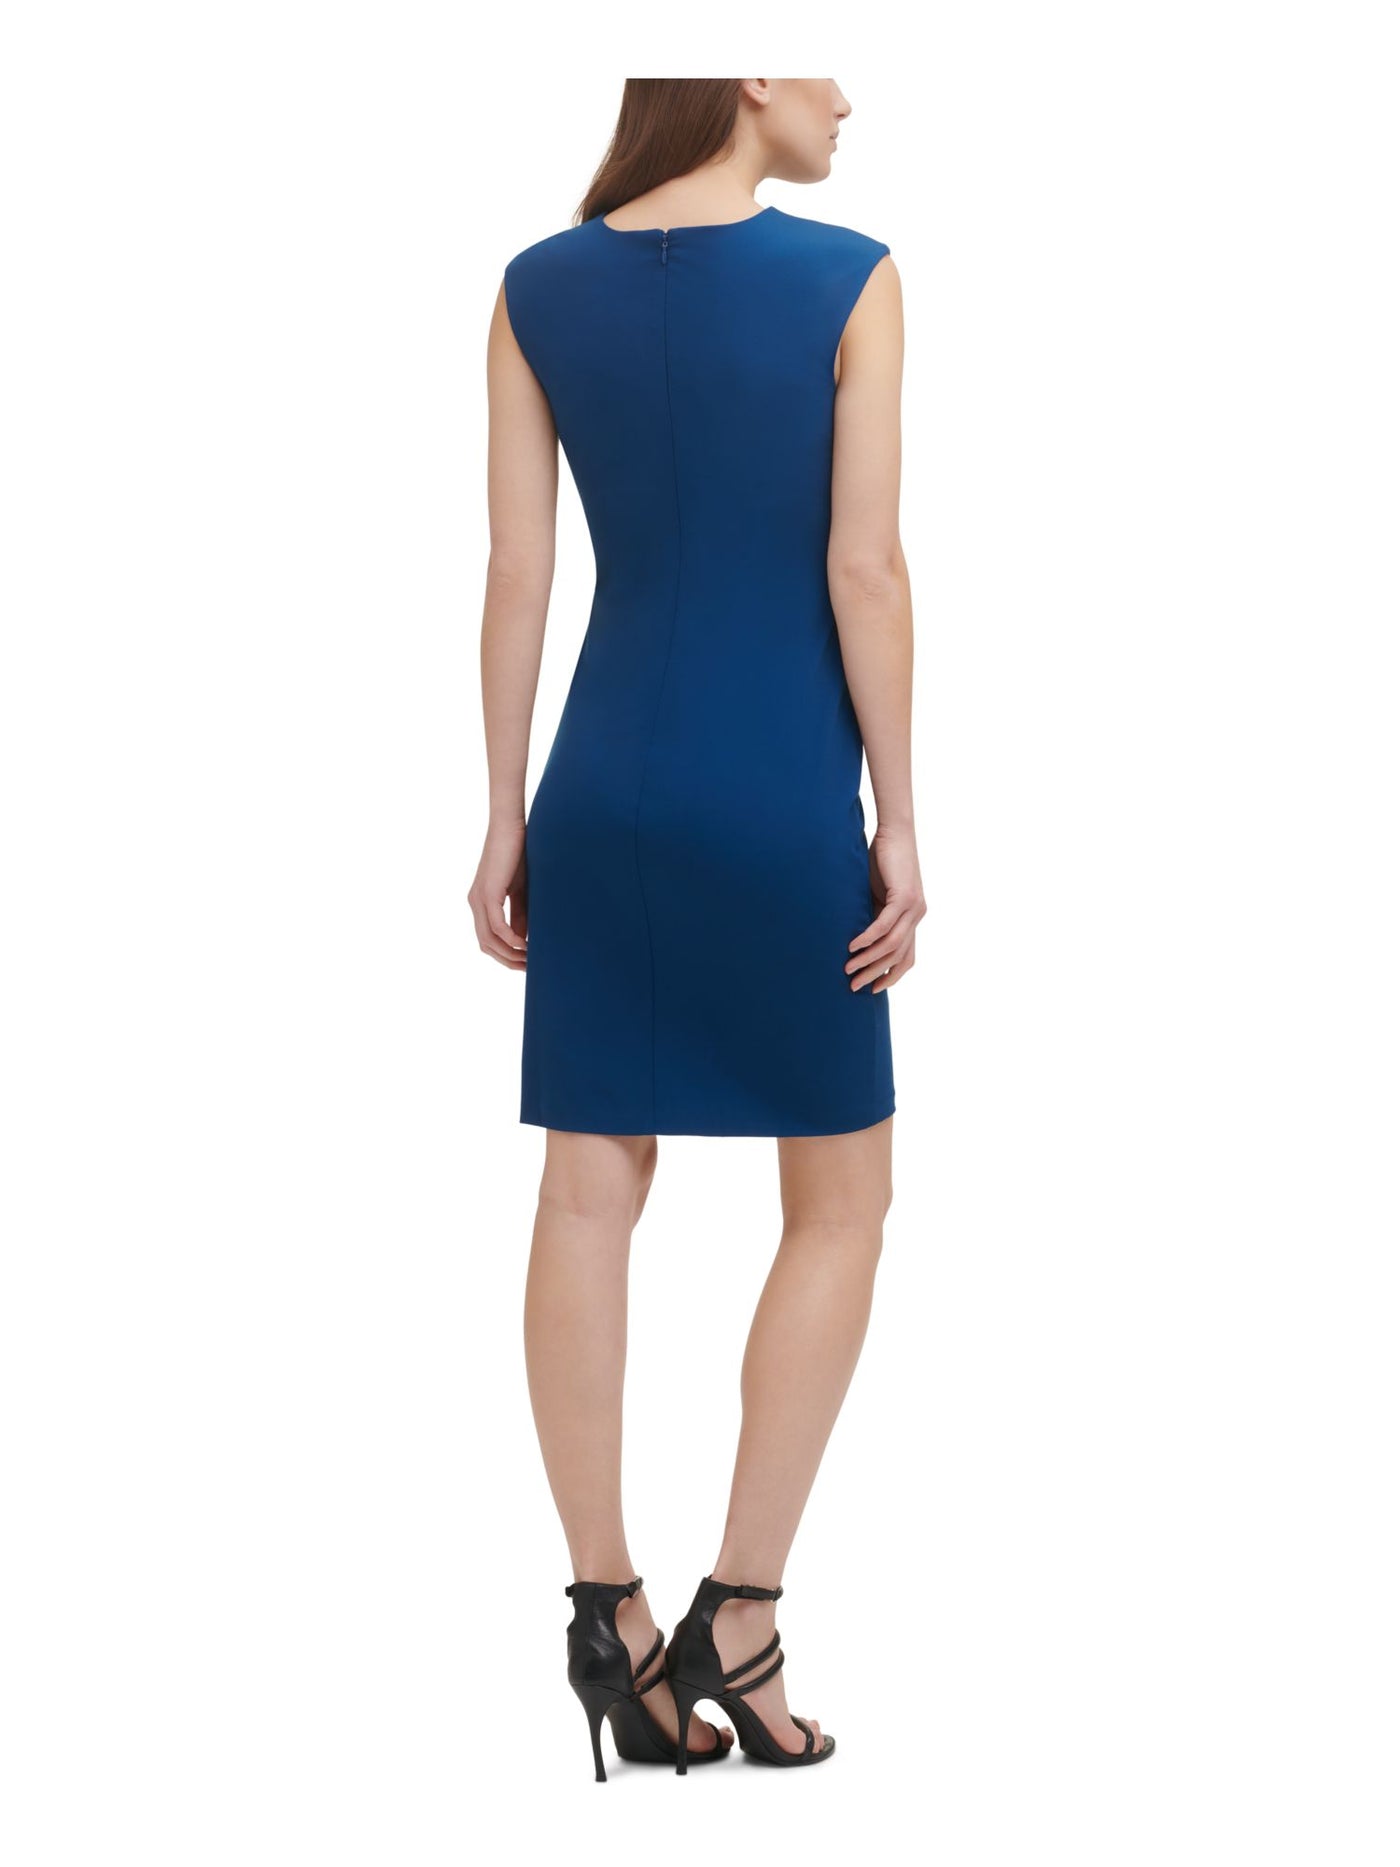 DKNY Womens Blue Zippered Side-knot Sleeveless Round Neck Above The Knee Cocktail Sheath Dress 14